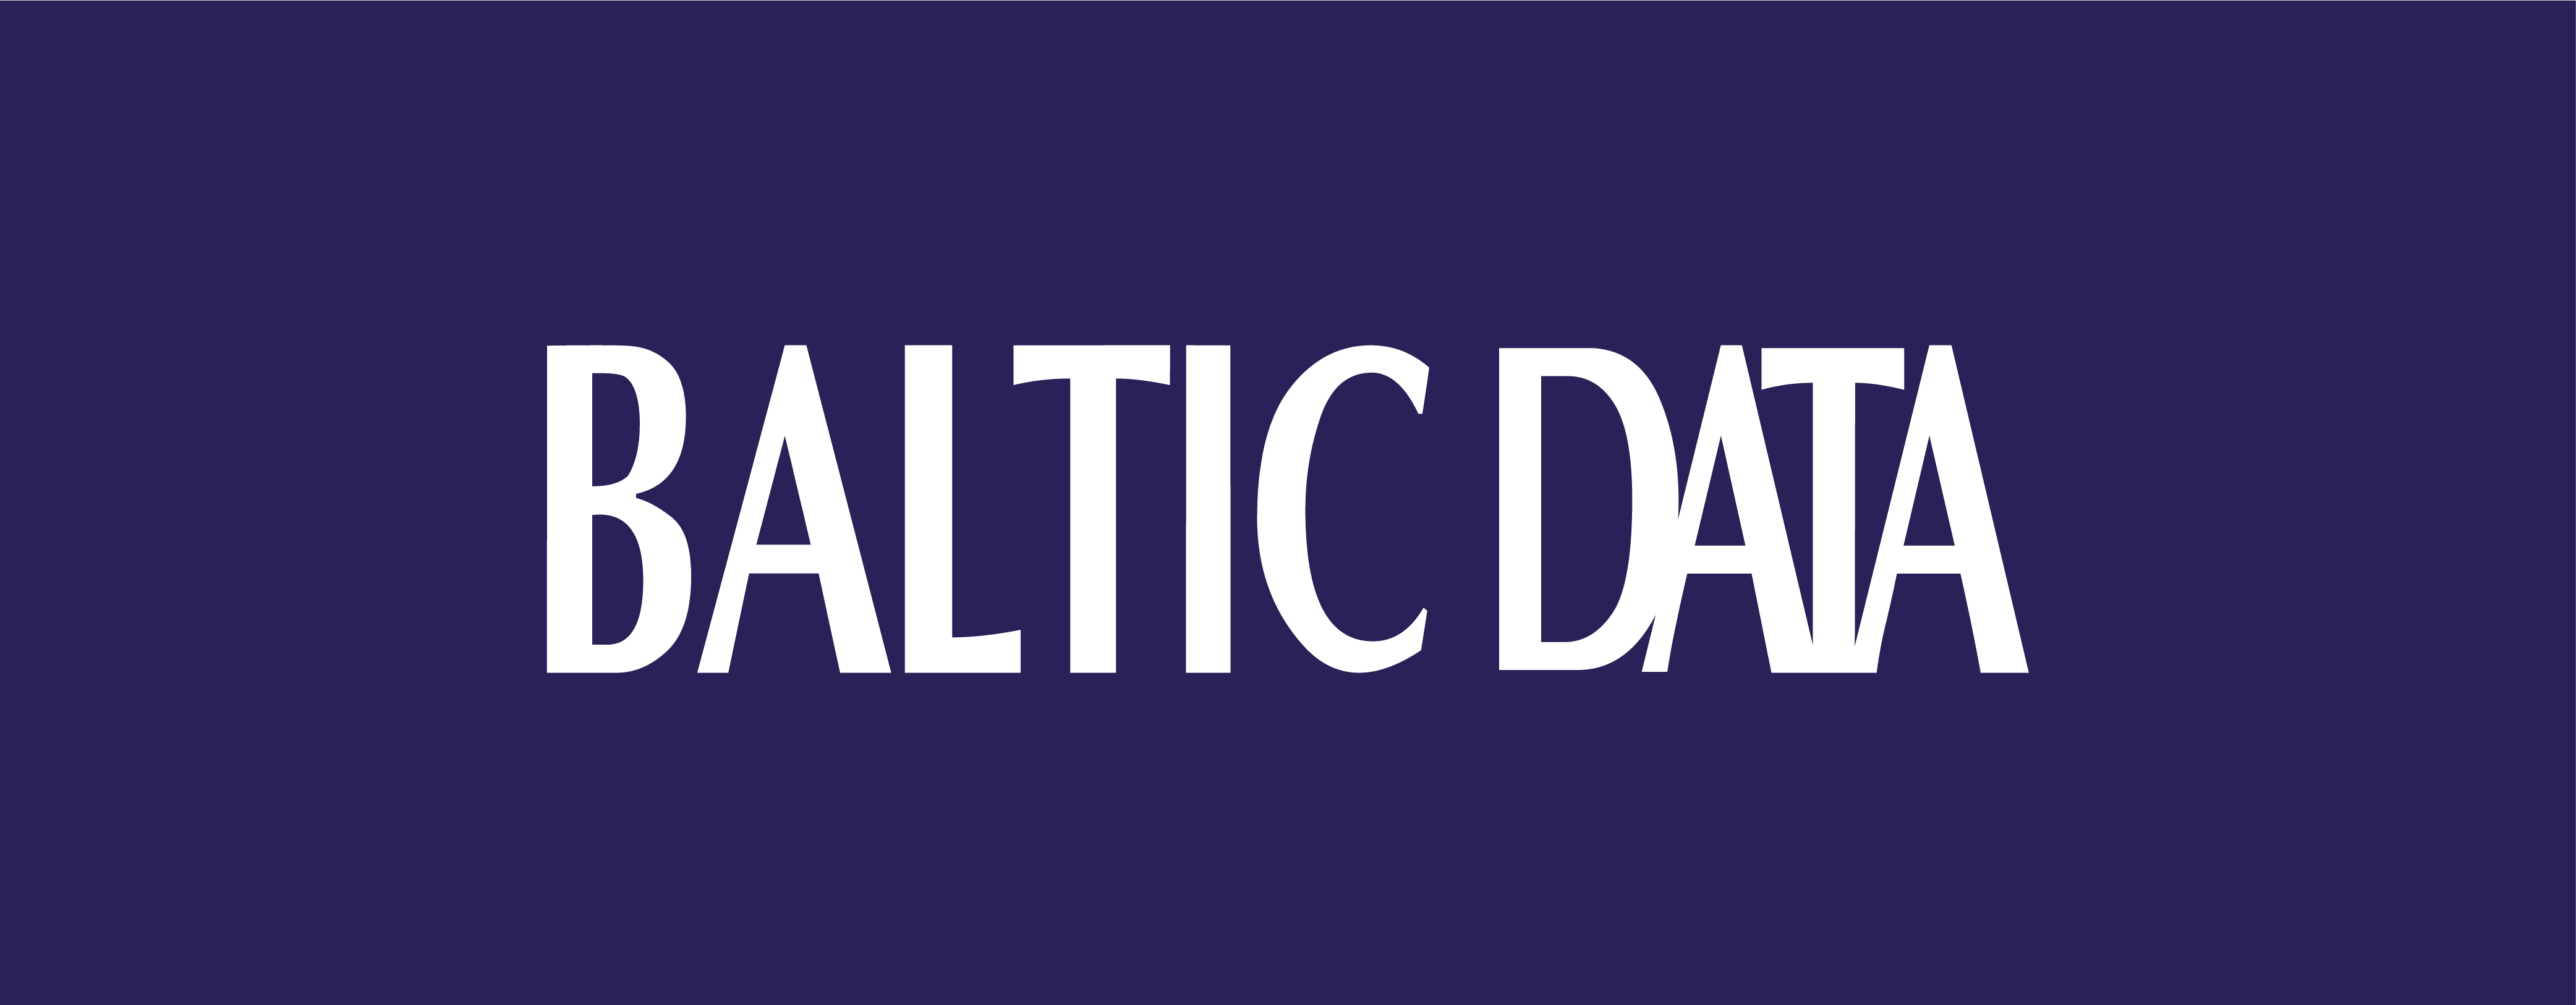 BalticData logo